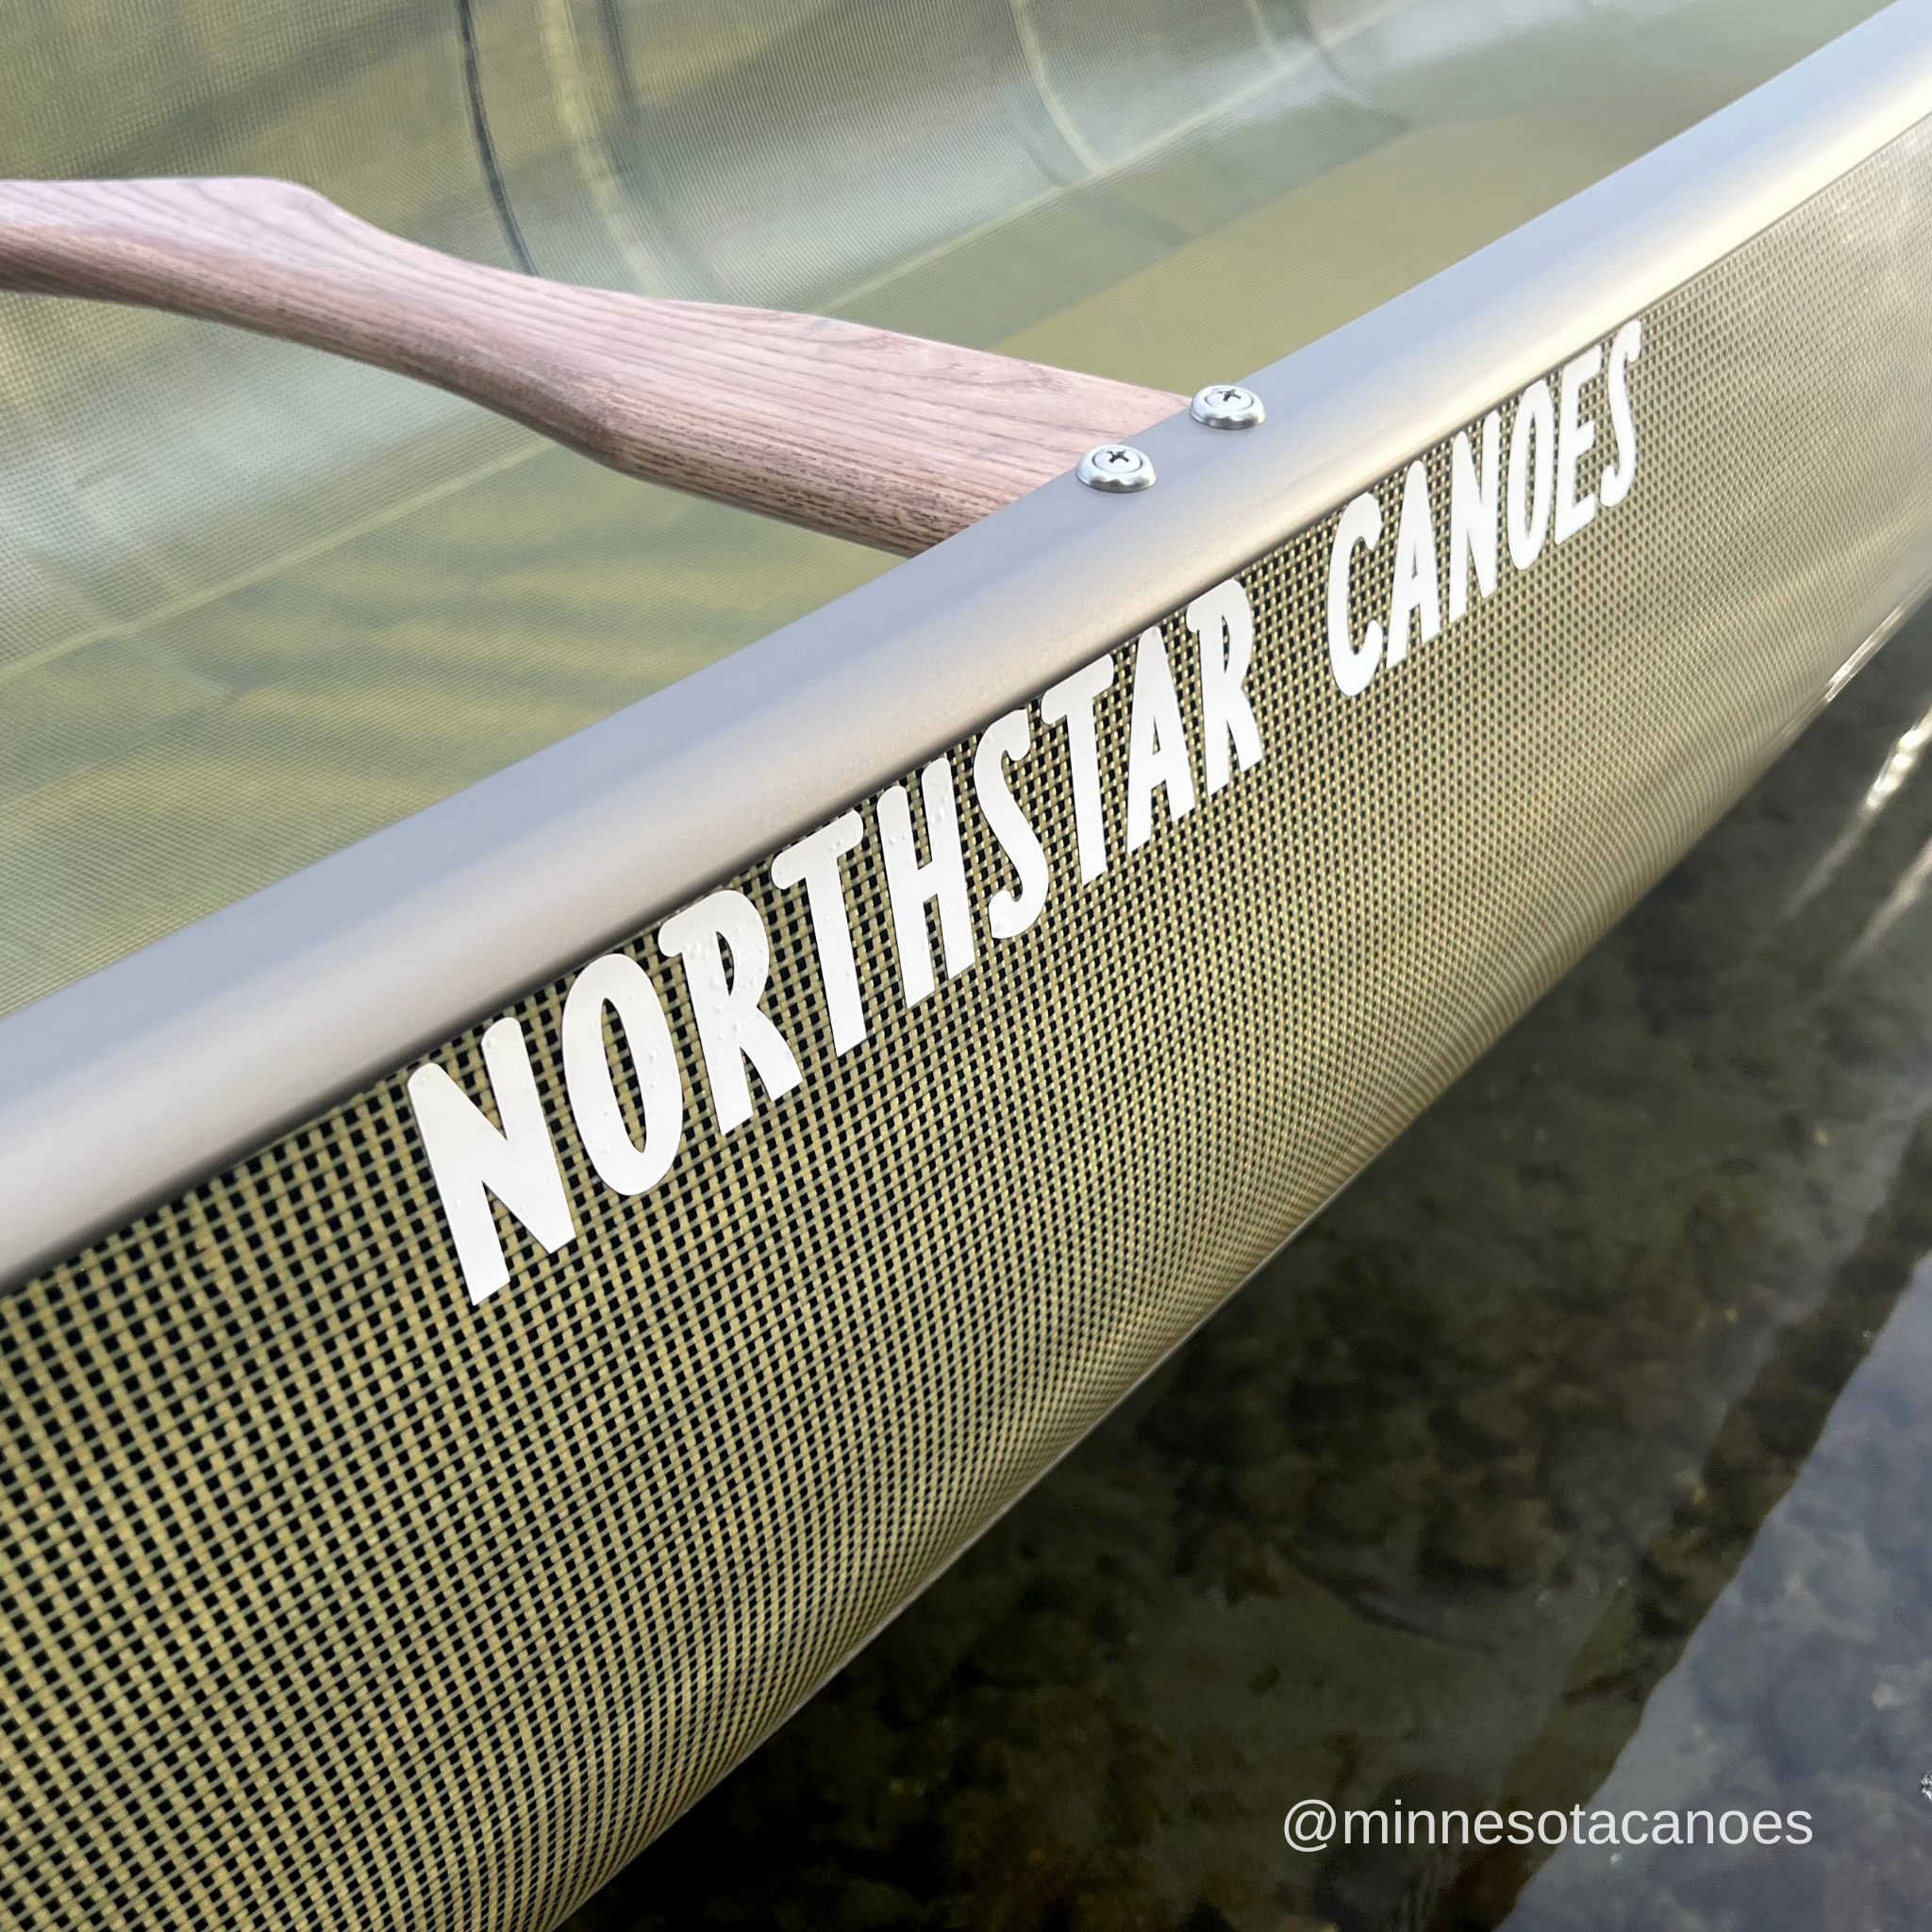 B 19 (19' 6") StarLite Tandem Northstar Canoe with 3 Seats